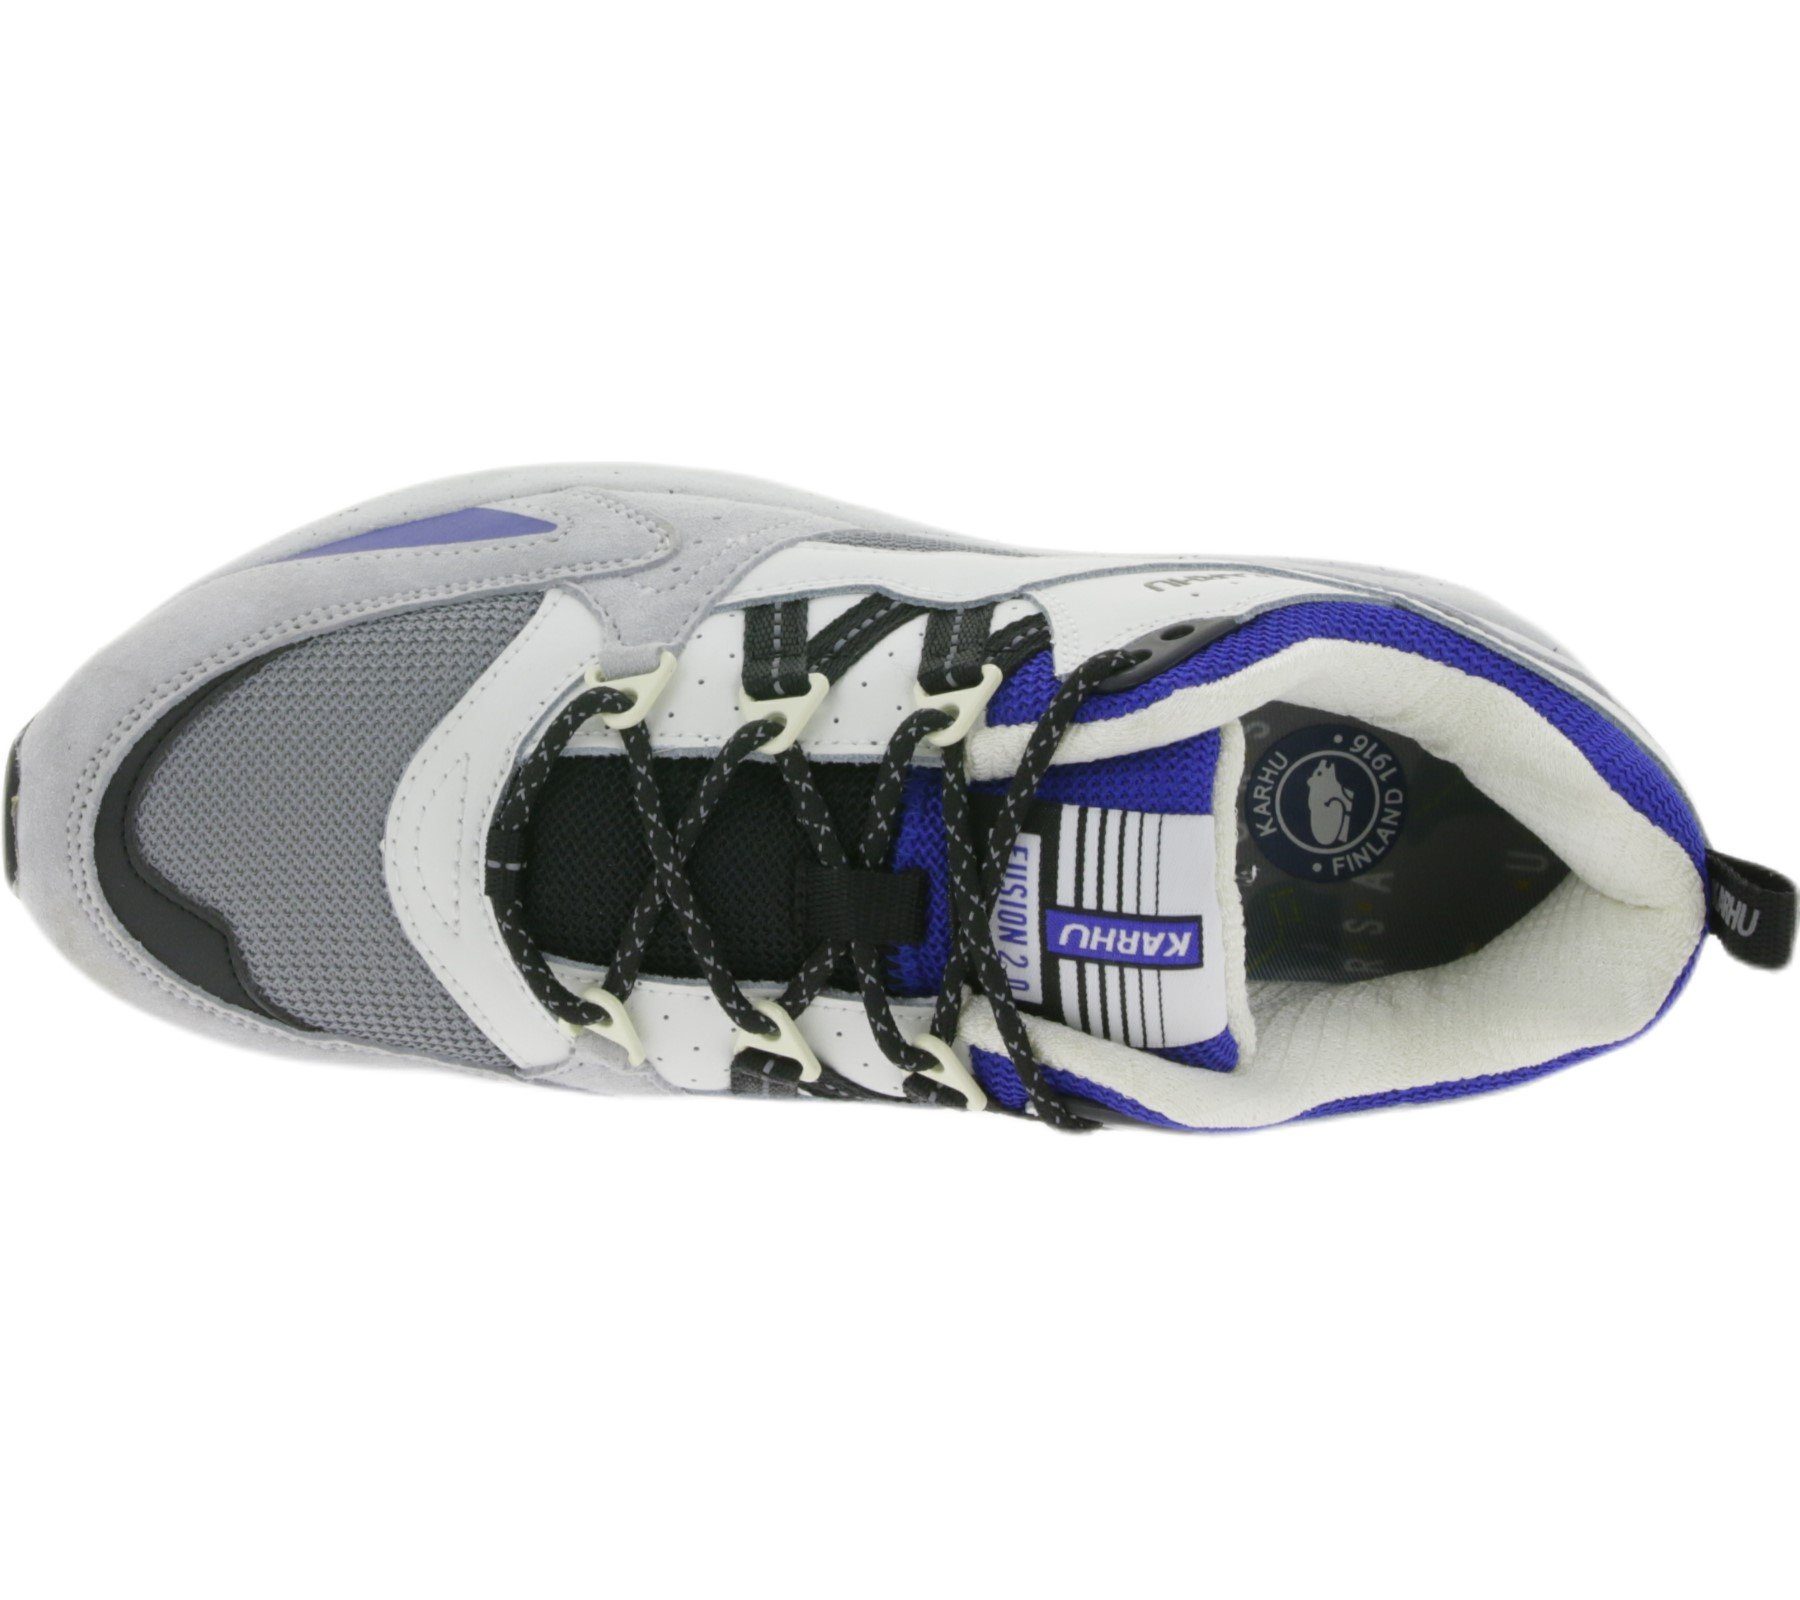 KARHU KARHU Fusion 2.0 Damen Top Sneaker F804105 Sneaker Sportschuhe Weiß/Grau/Blau Turnschuhe Low